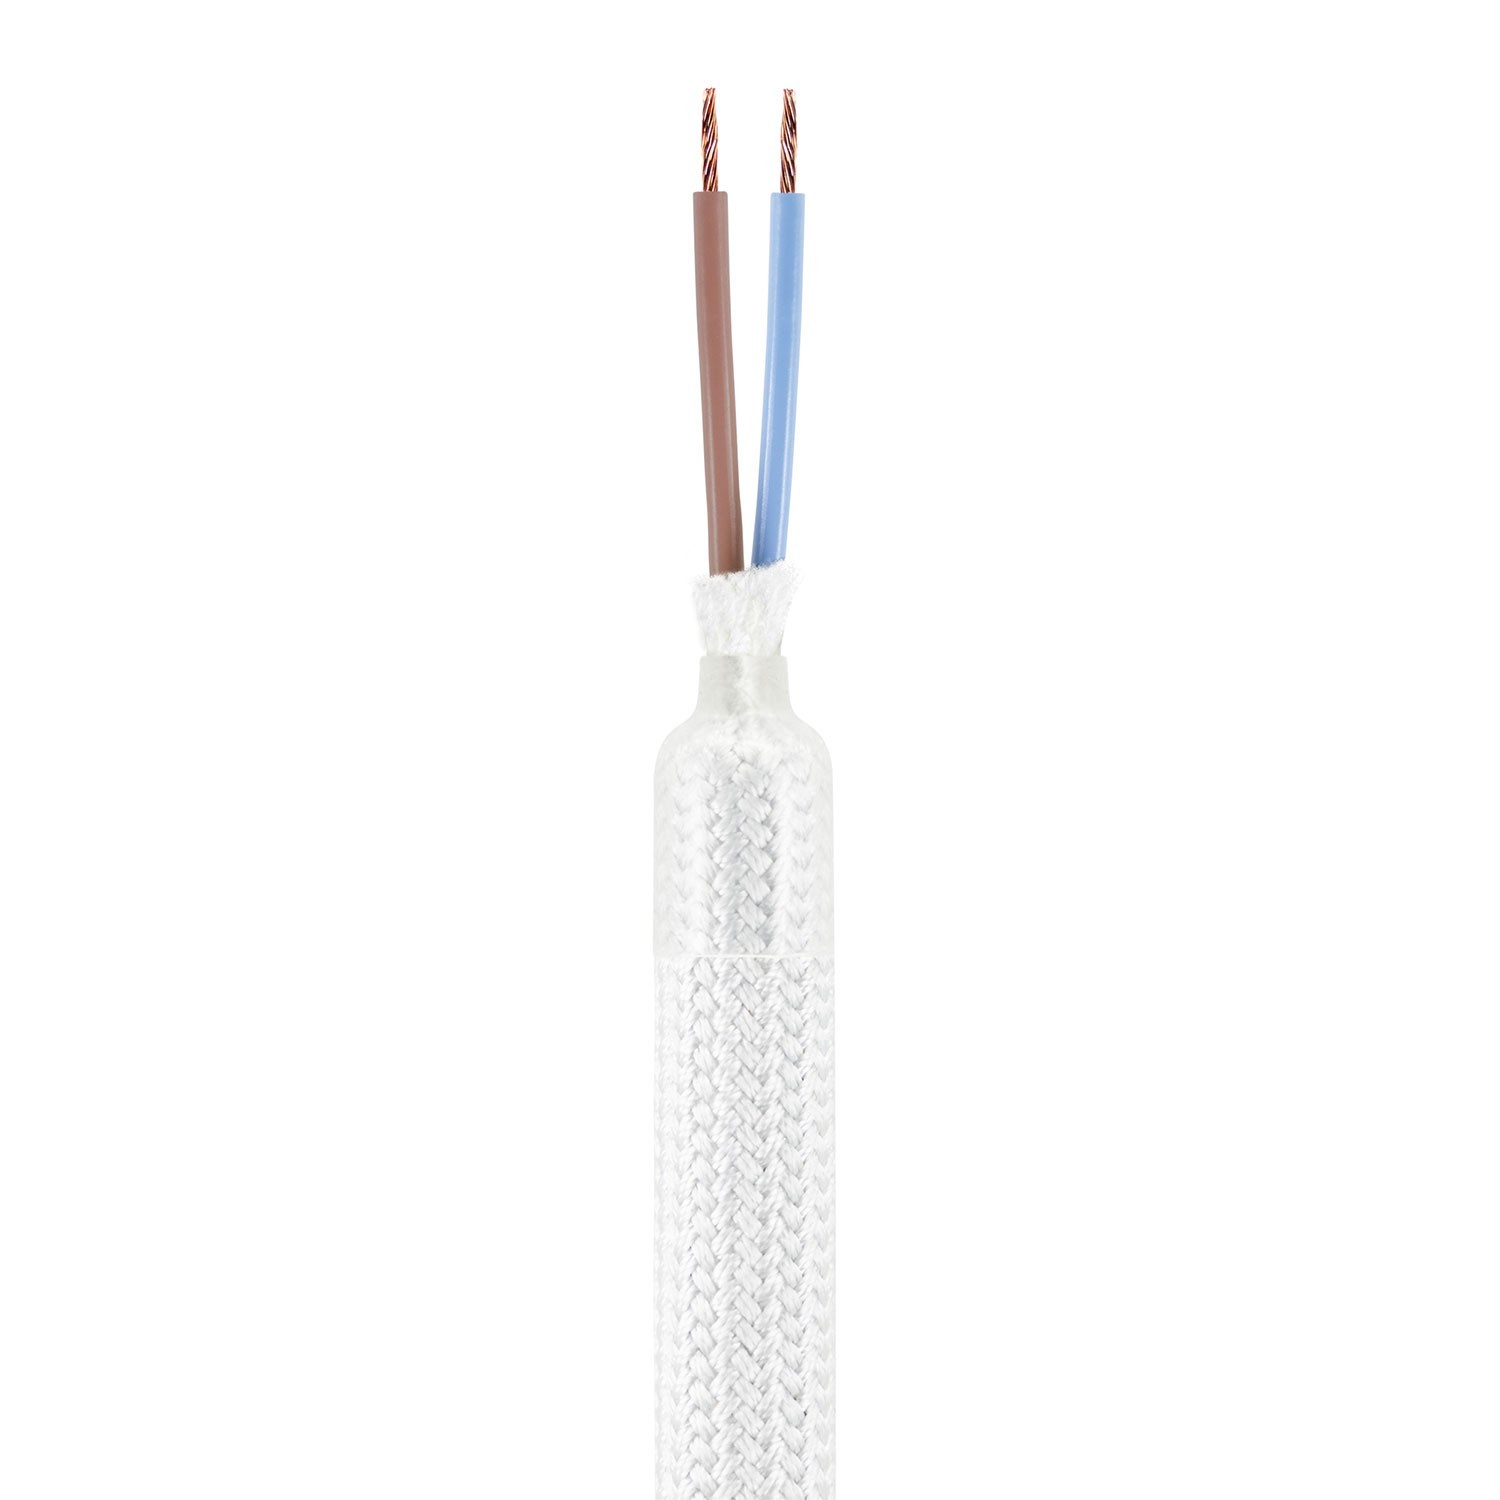 Creative Flex flexible tube covered in White RM01 fabric